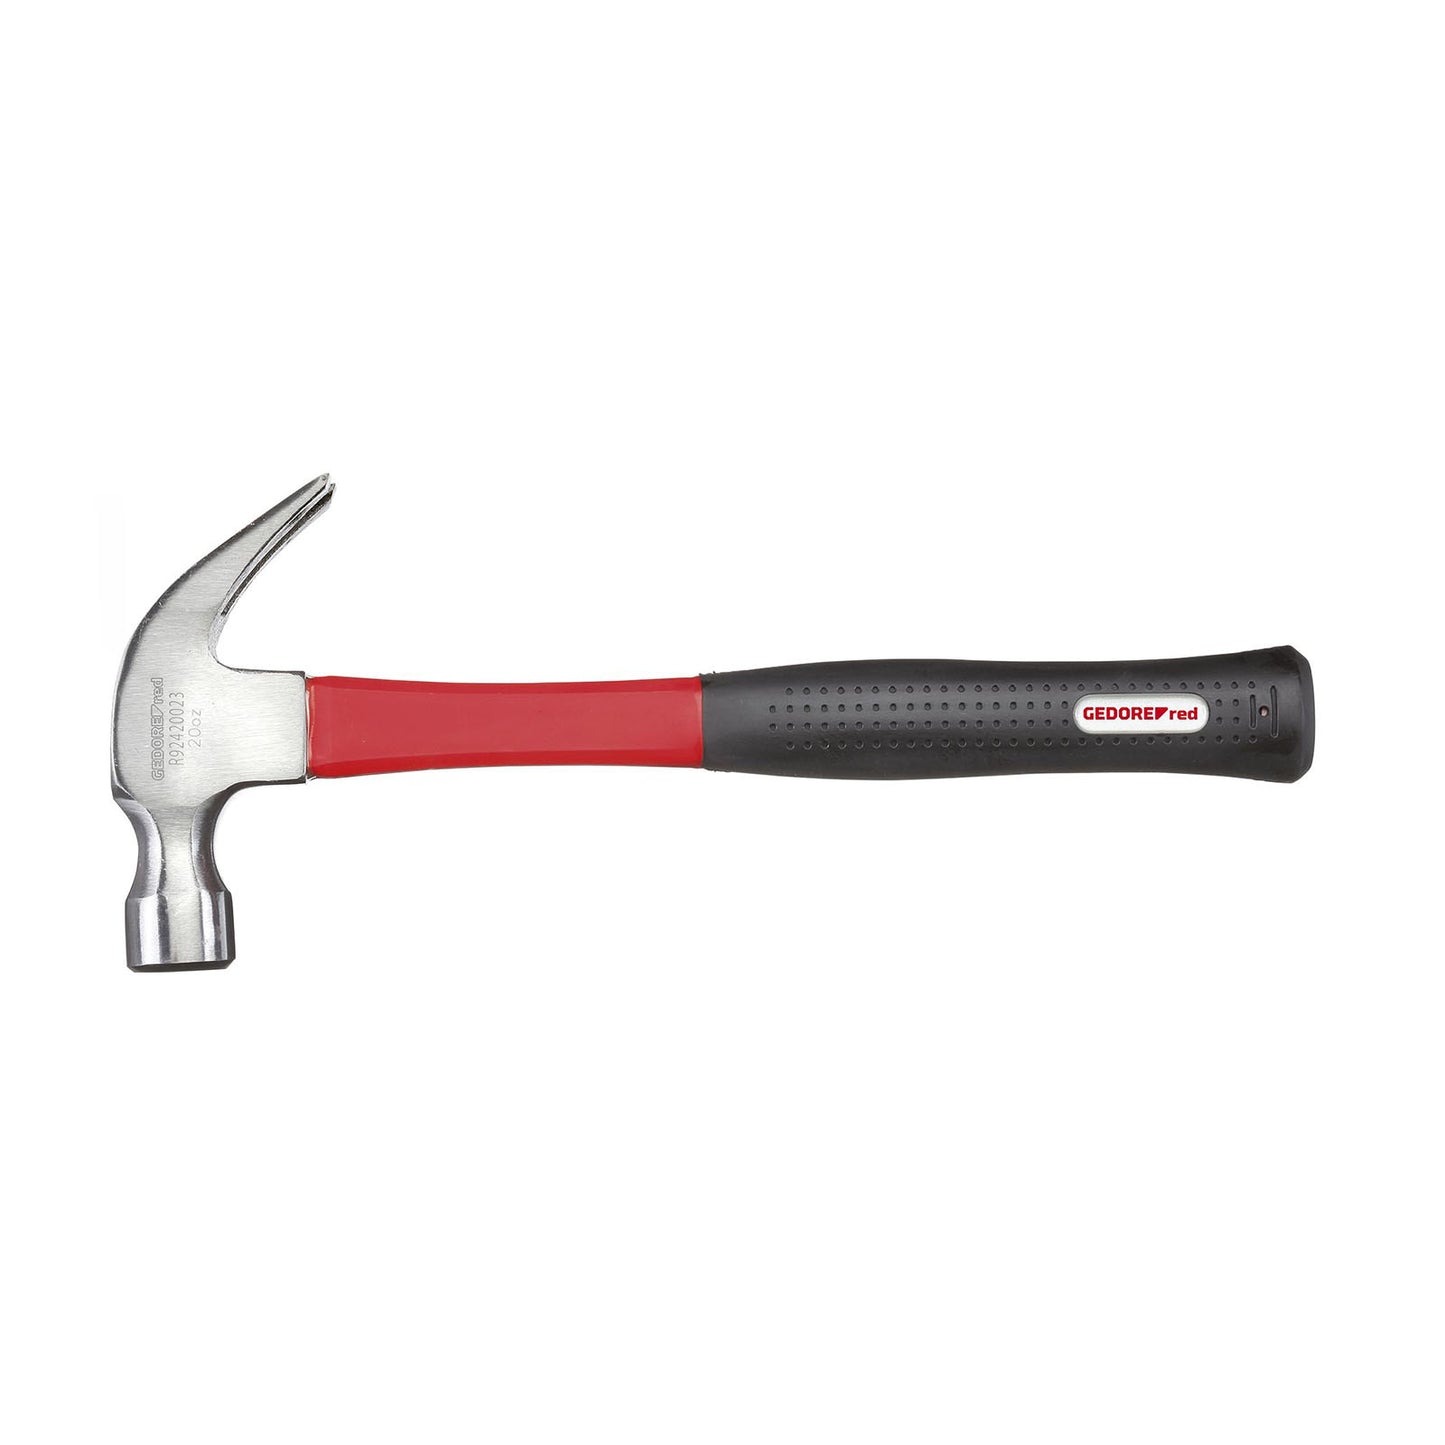 GEDORE red R92420023 - Claw hammer, American type 570 g fiberglass (3300782)